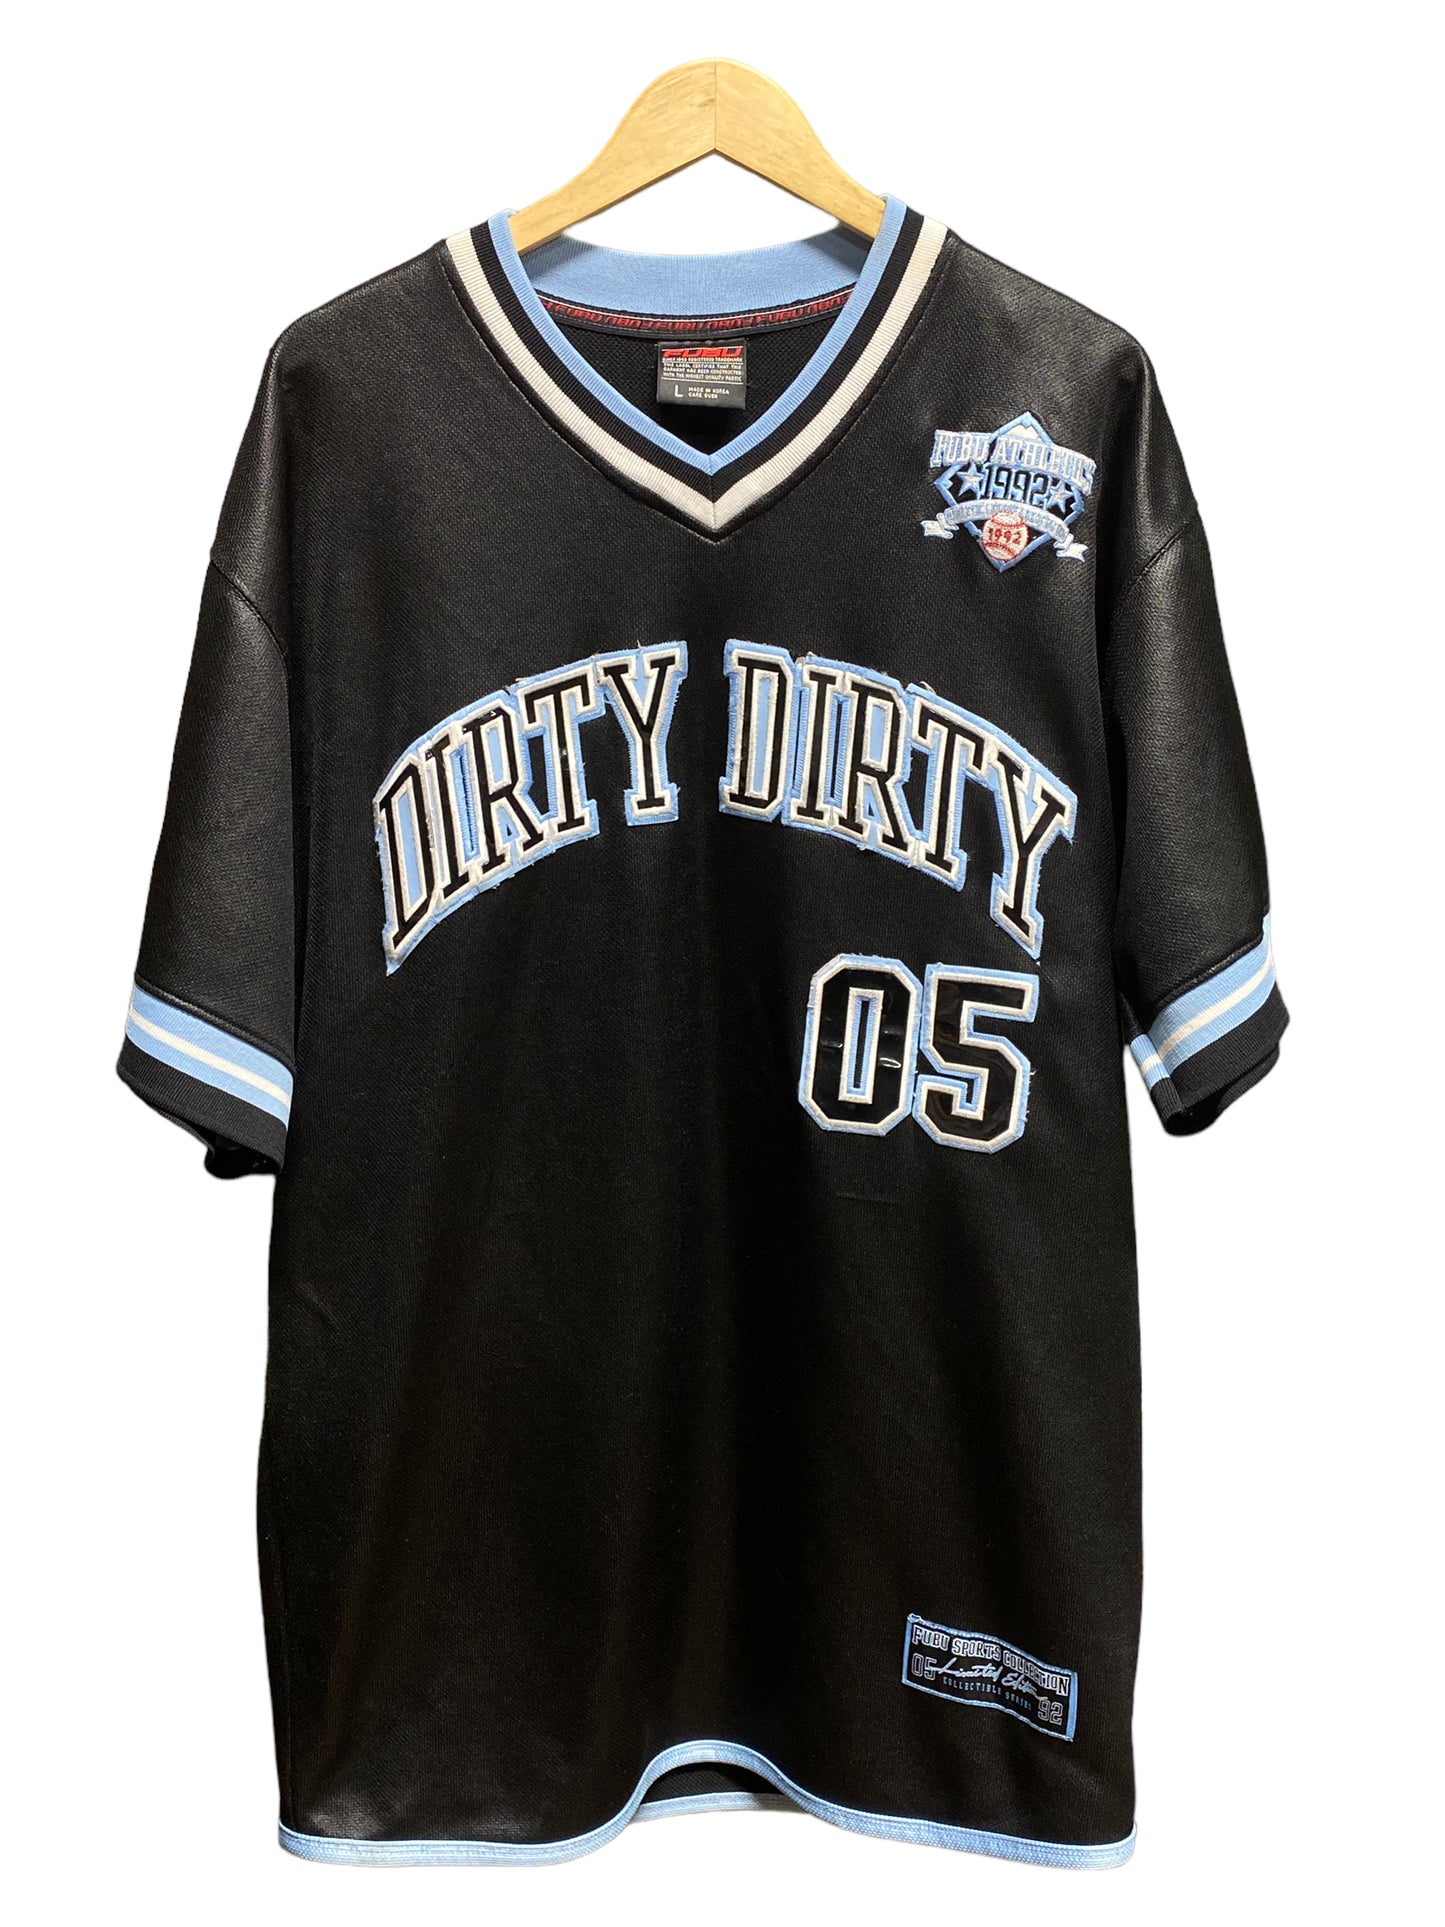 Vintage FUBU Dirty Dirty Black Blue 05 Football Jersey Size Large